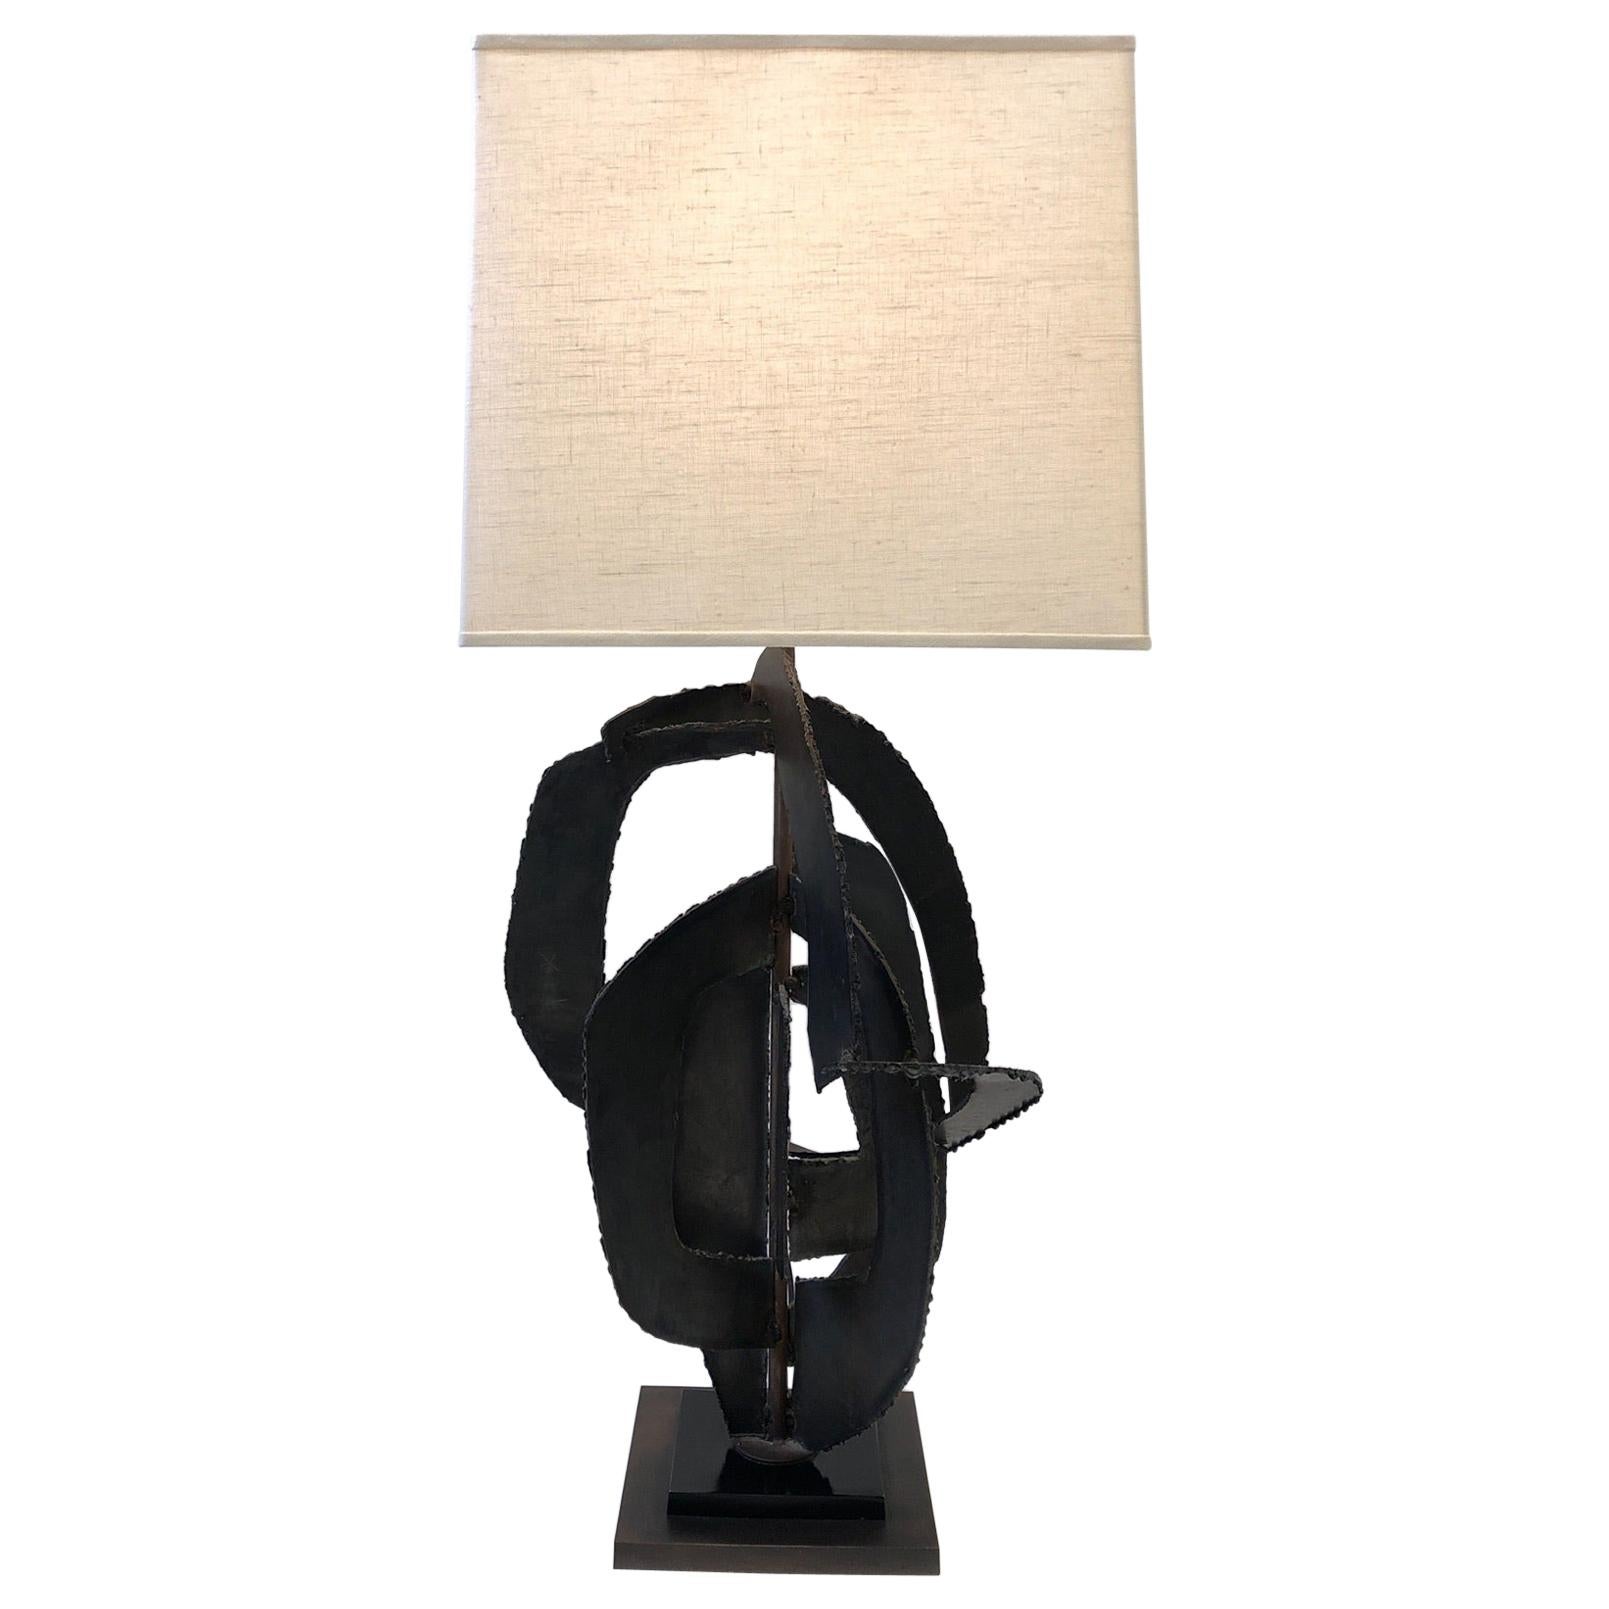 Sculptural Brutalist Steel Table Lamp by Richard Barr for Laurel Lamp Co